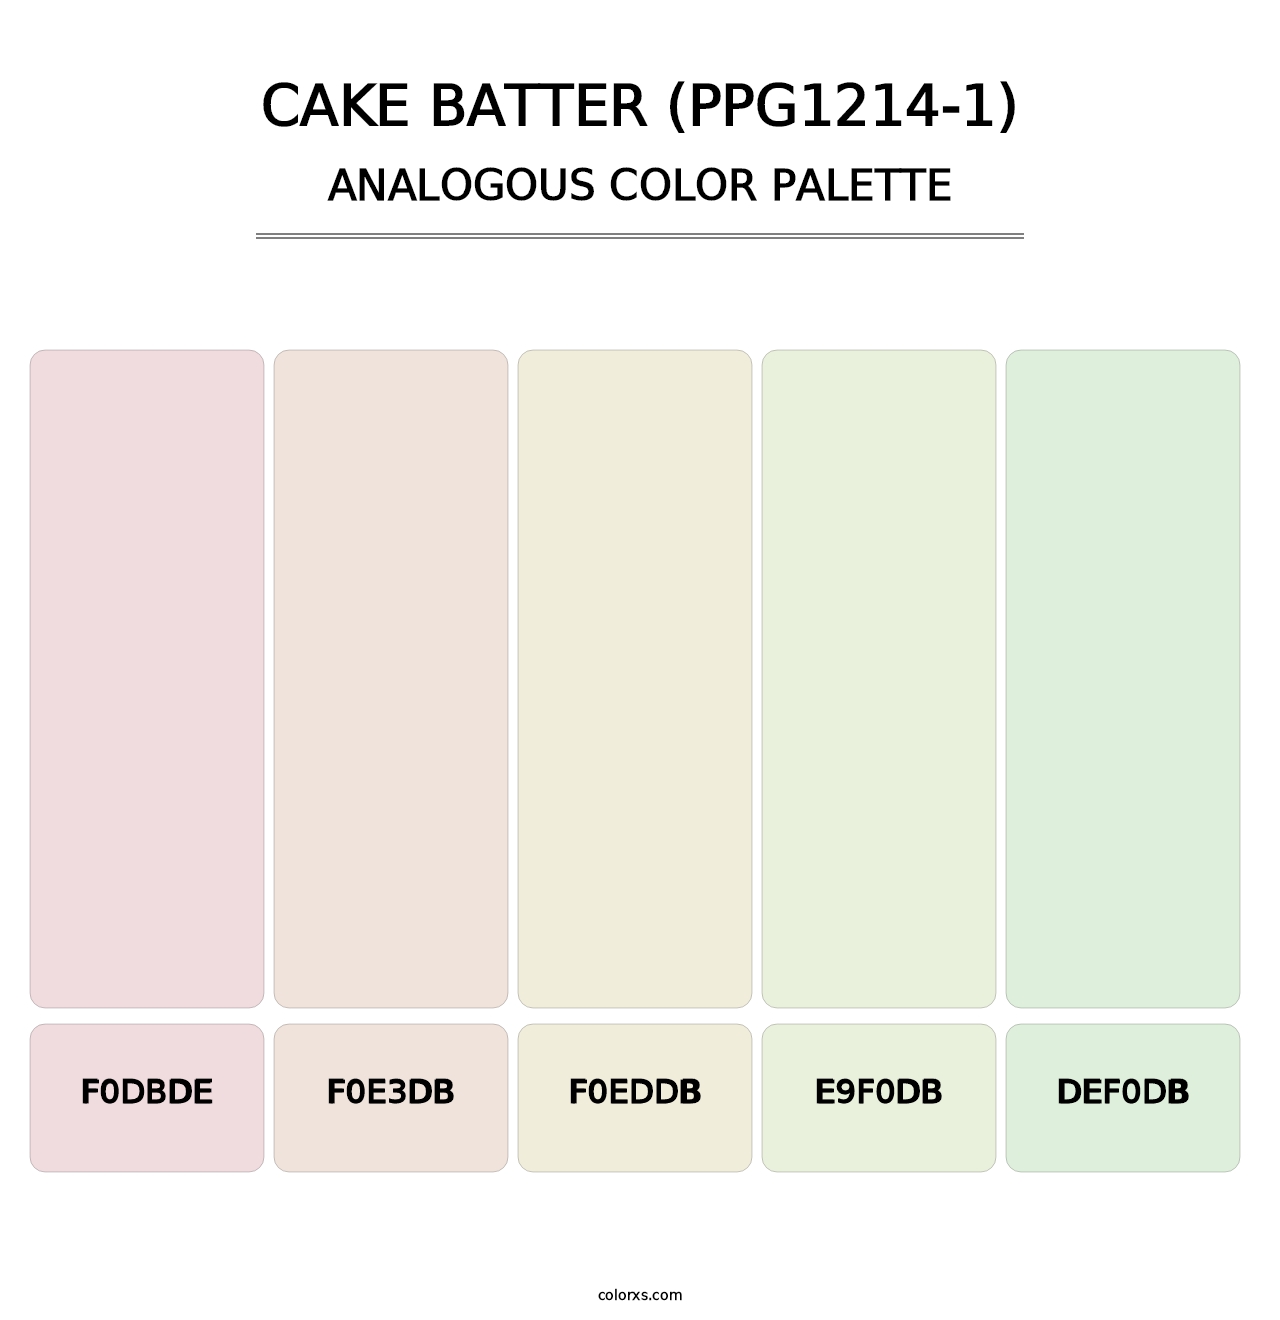 Cake Batter (PPG1214-1) - Analogous Color Palette